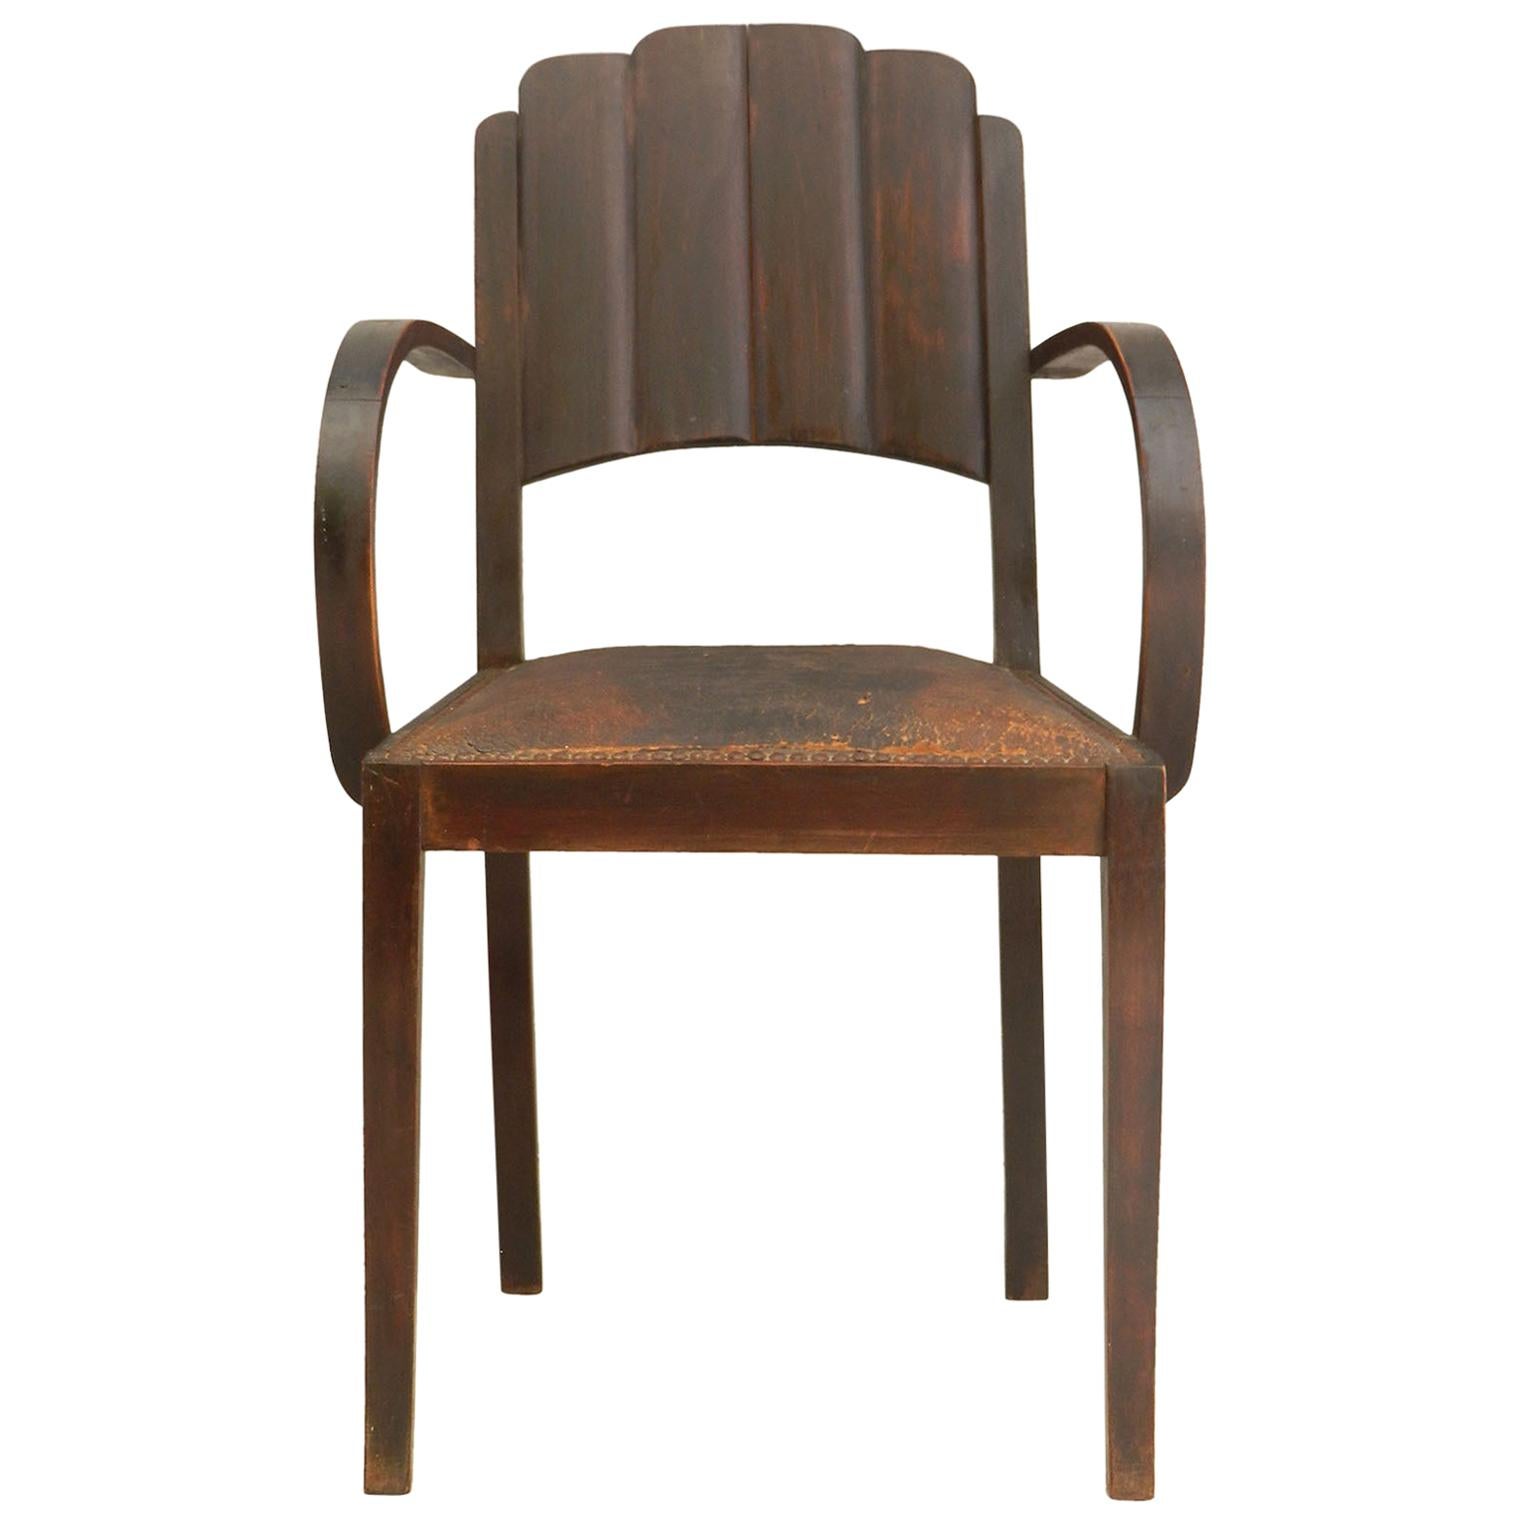 Five Art Deco Open Armchair Bridge Chairs Price per Piece includes Recovering